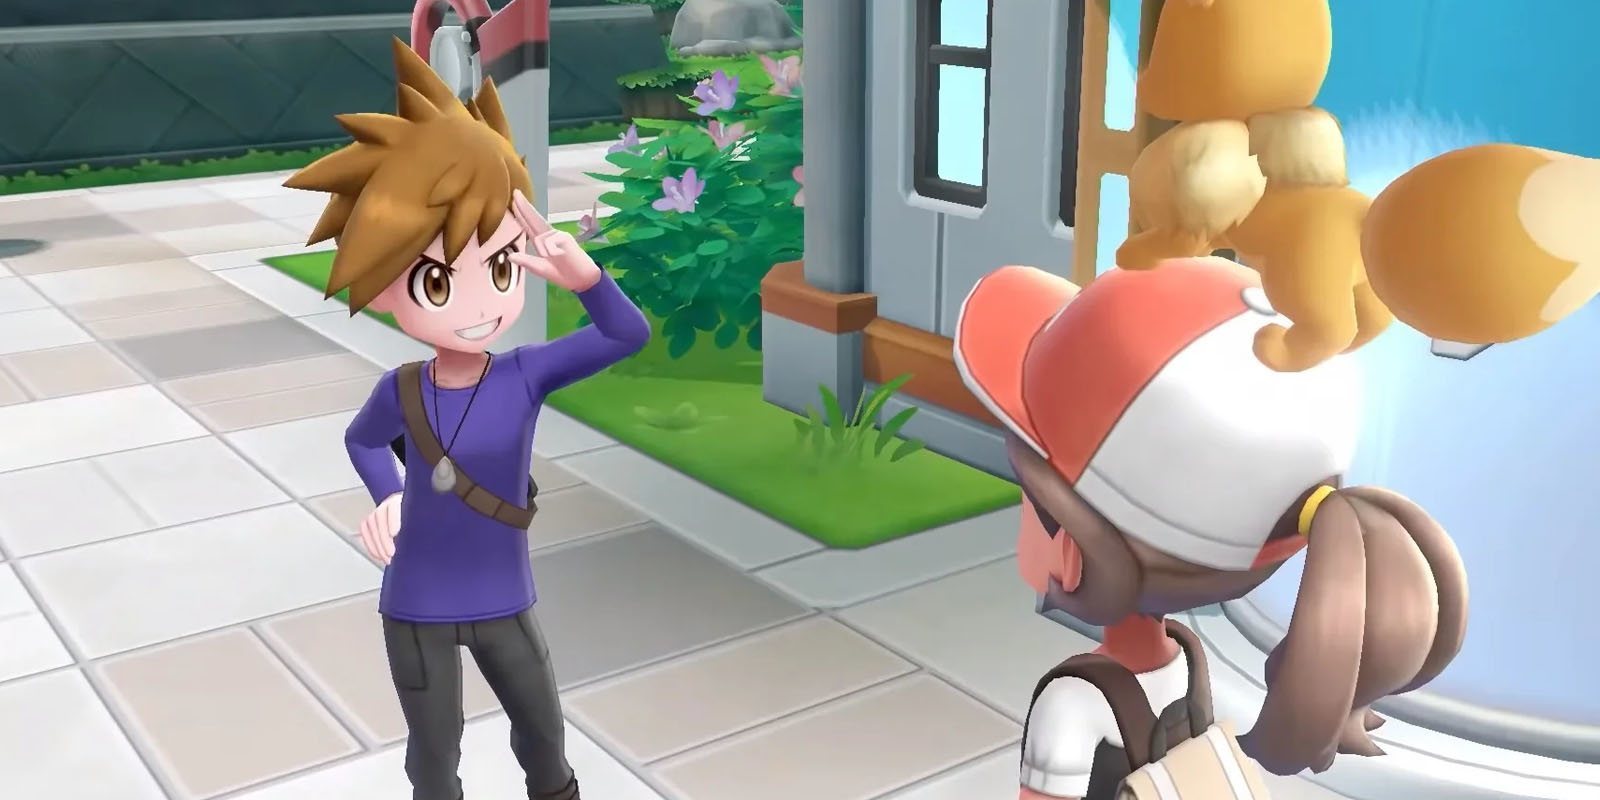 Game Freak no descarta mantener la conexión con 'Pokémon Go' en futuras entregas